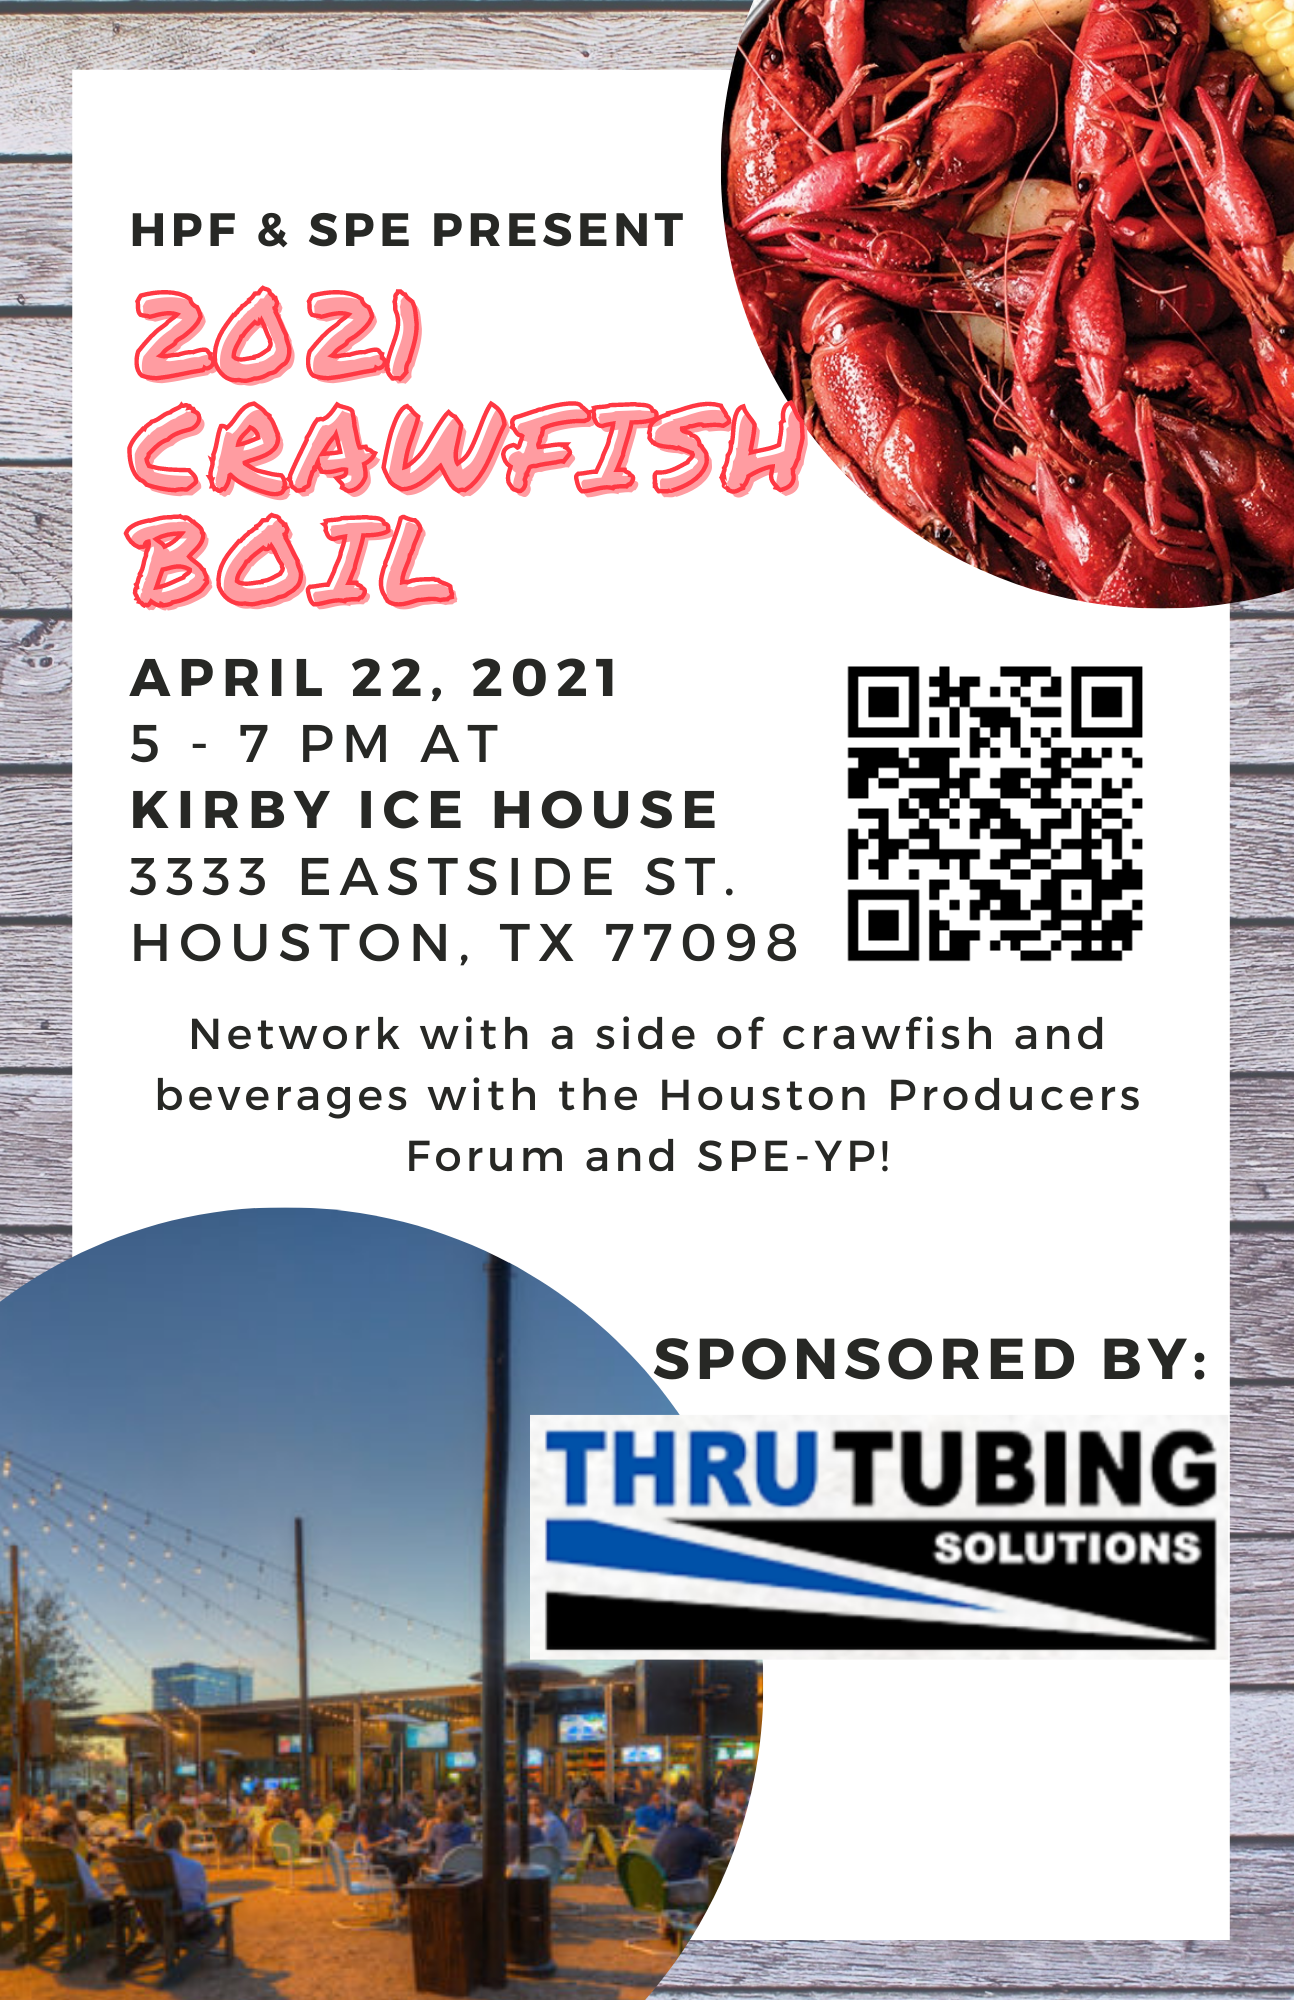 Kirby Ice House - 3333 Eastside St in Houston, TX